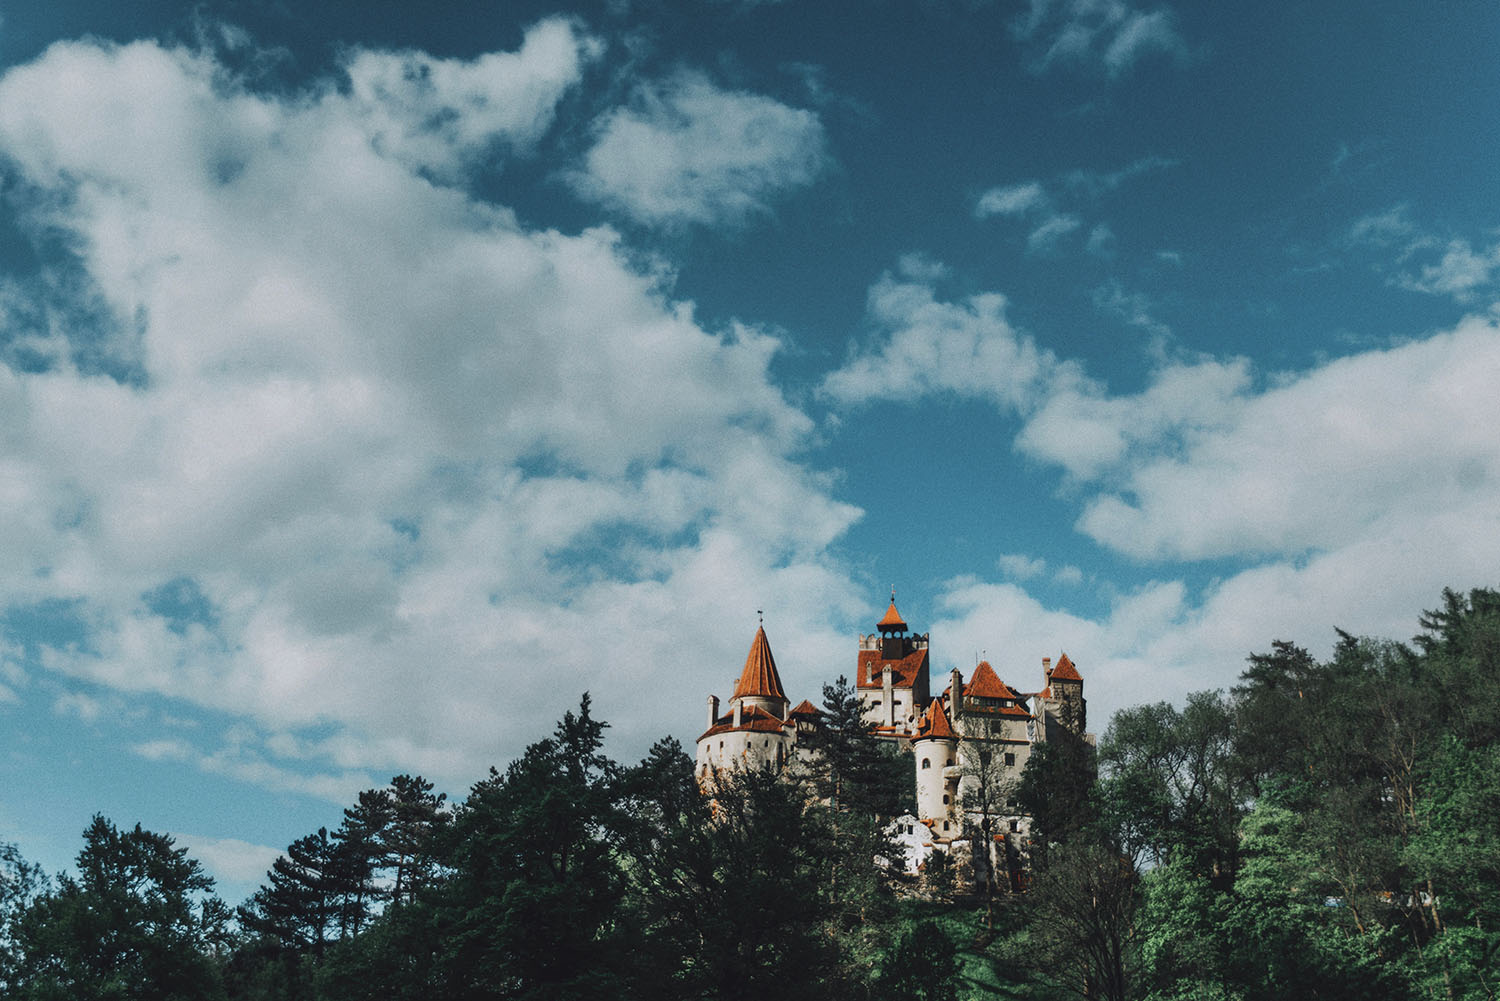 Dracula's Castle, Bran Castle in Transylvania